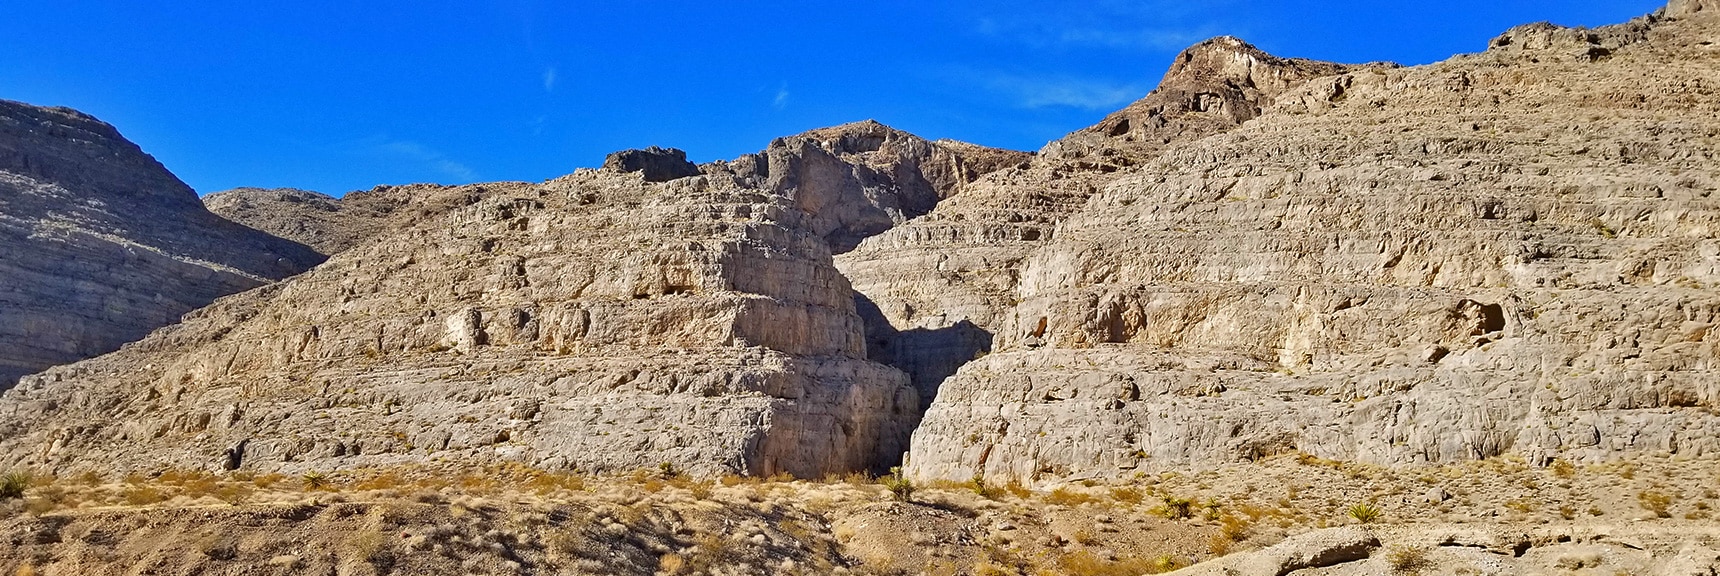 Slot Canyon on Western Cliffs in Pass | Gass Peak Road Circuit | Desert National Wildlife Refuge | Nevada